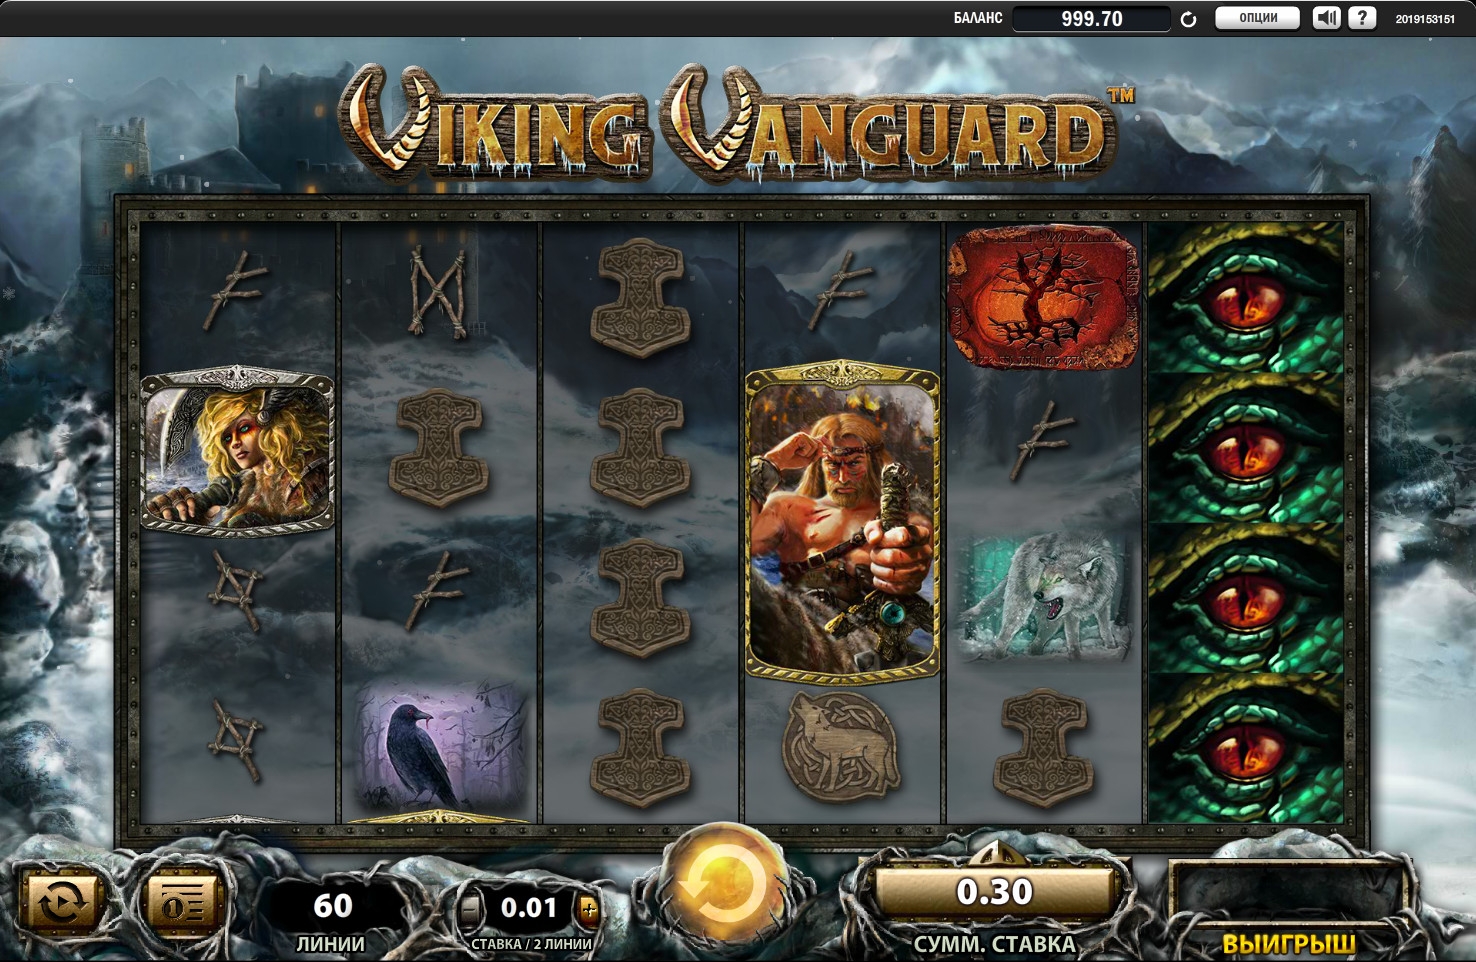 Viking Vanguard (Viking Vanguard) from category Slots